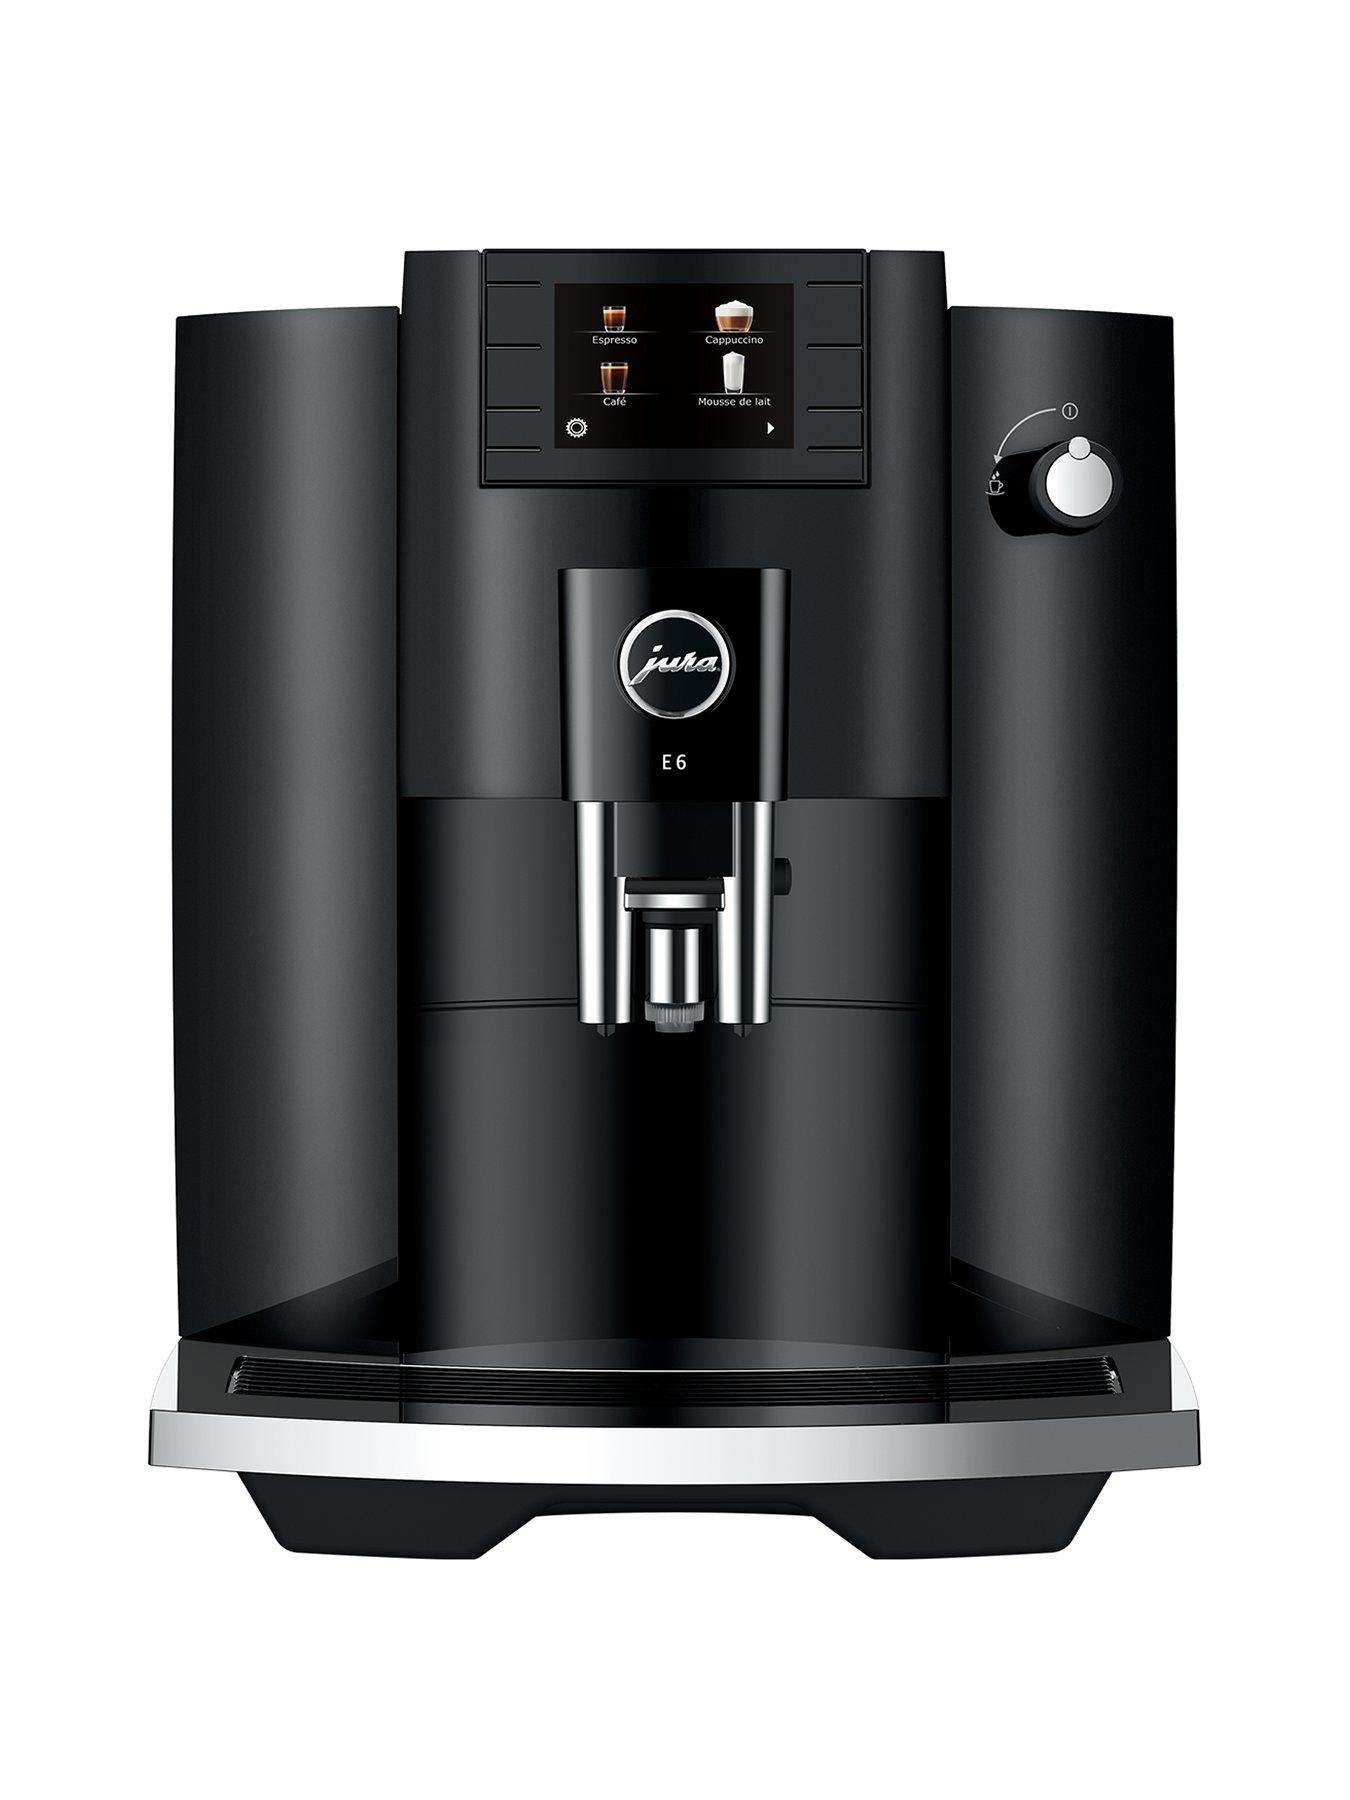 https://media.very.ie/i/littlewoodsireland/VBY4G_SQ1_0000000004_BLACK_SLf/jura-jura-e6-coffee-machine-black.jpg?$180x240_retinamobilex2$&$roundel_lwireland$&p1_img=vsp_pink